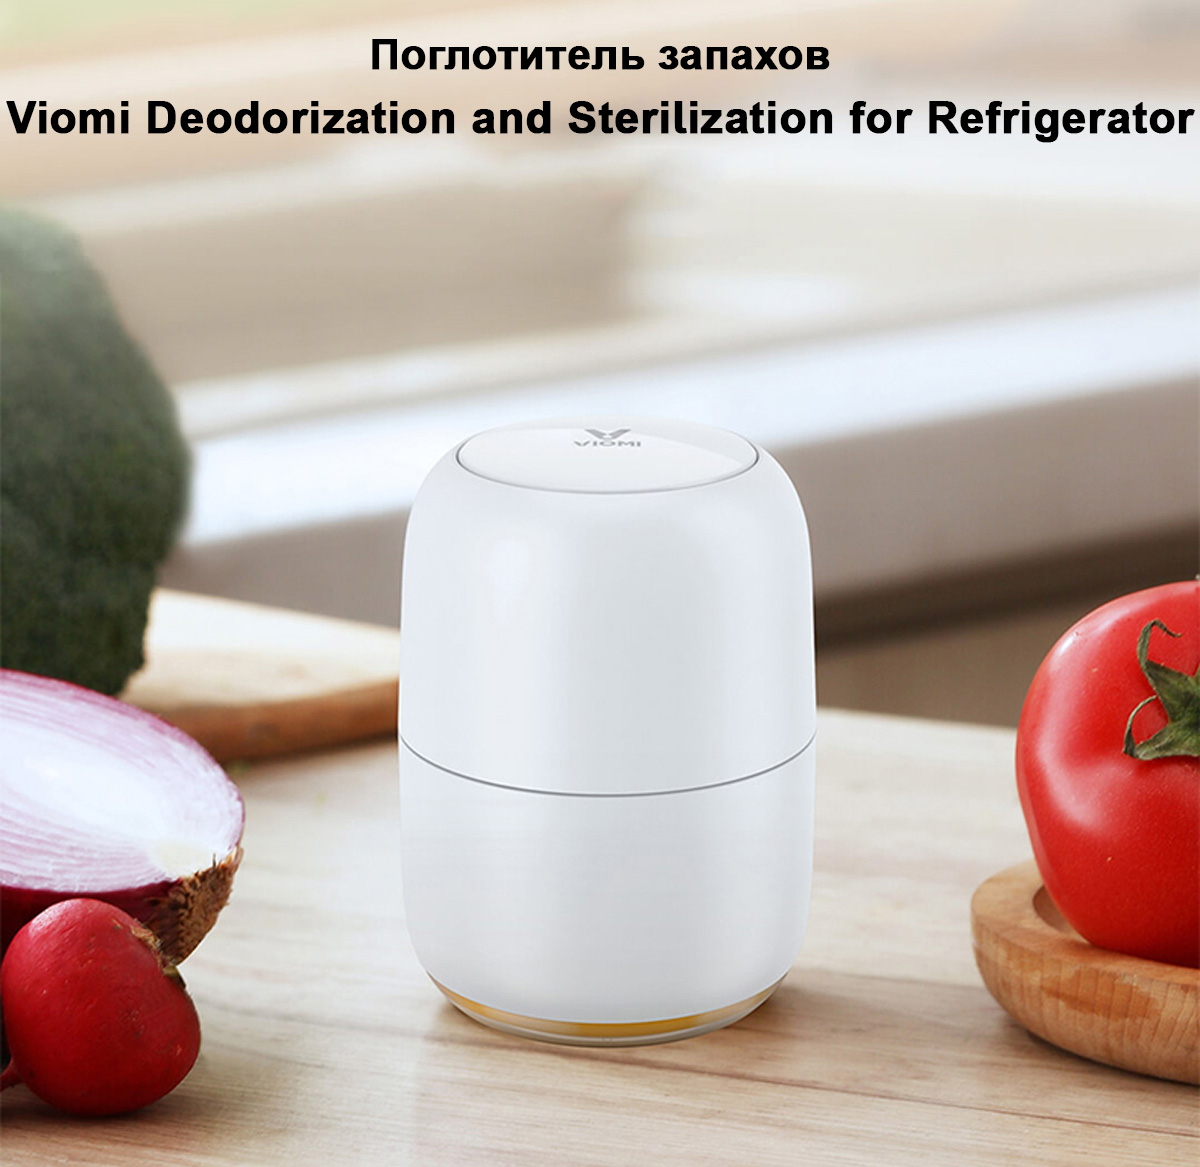 Поглотитель запахов Viomi Deodorization and Sterilization for Refrigerator